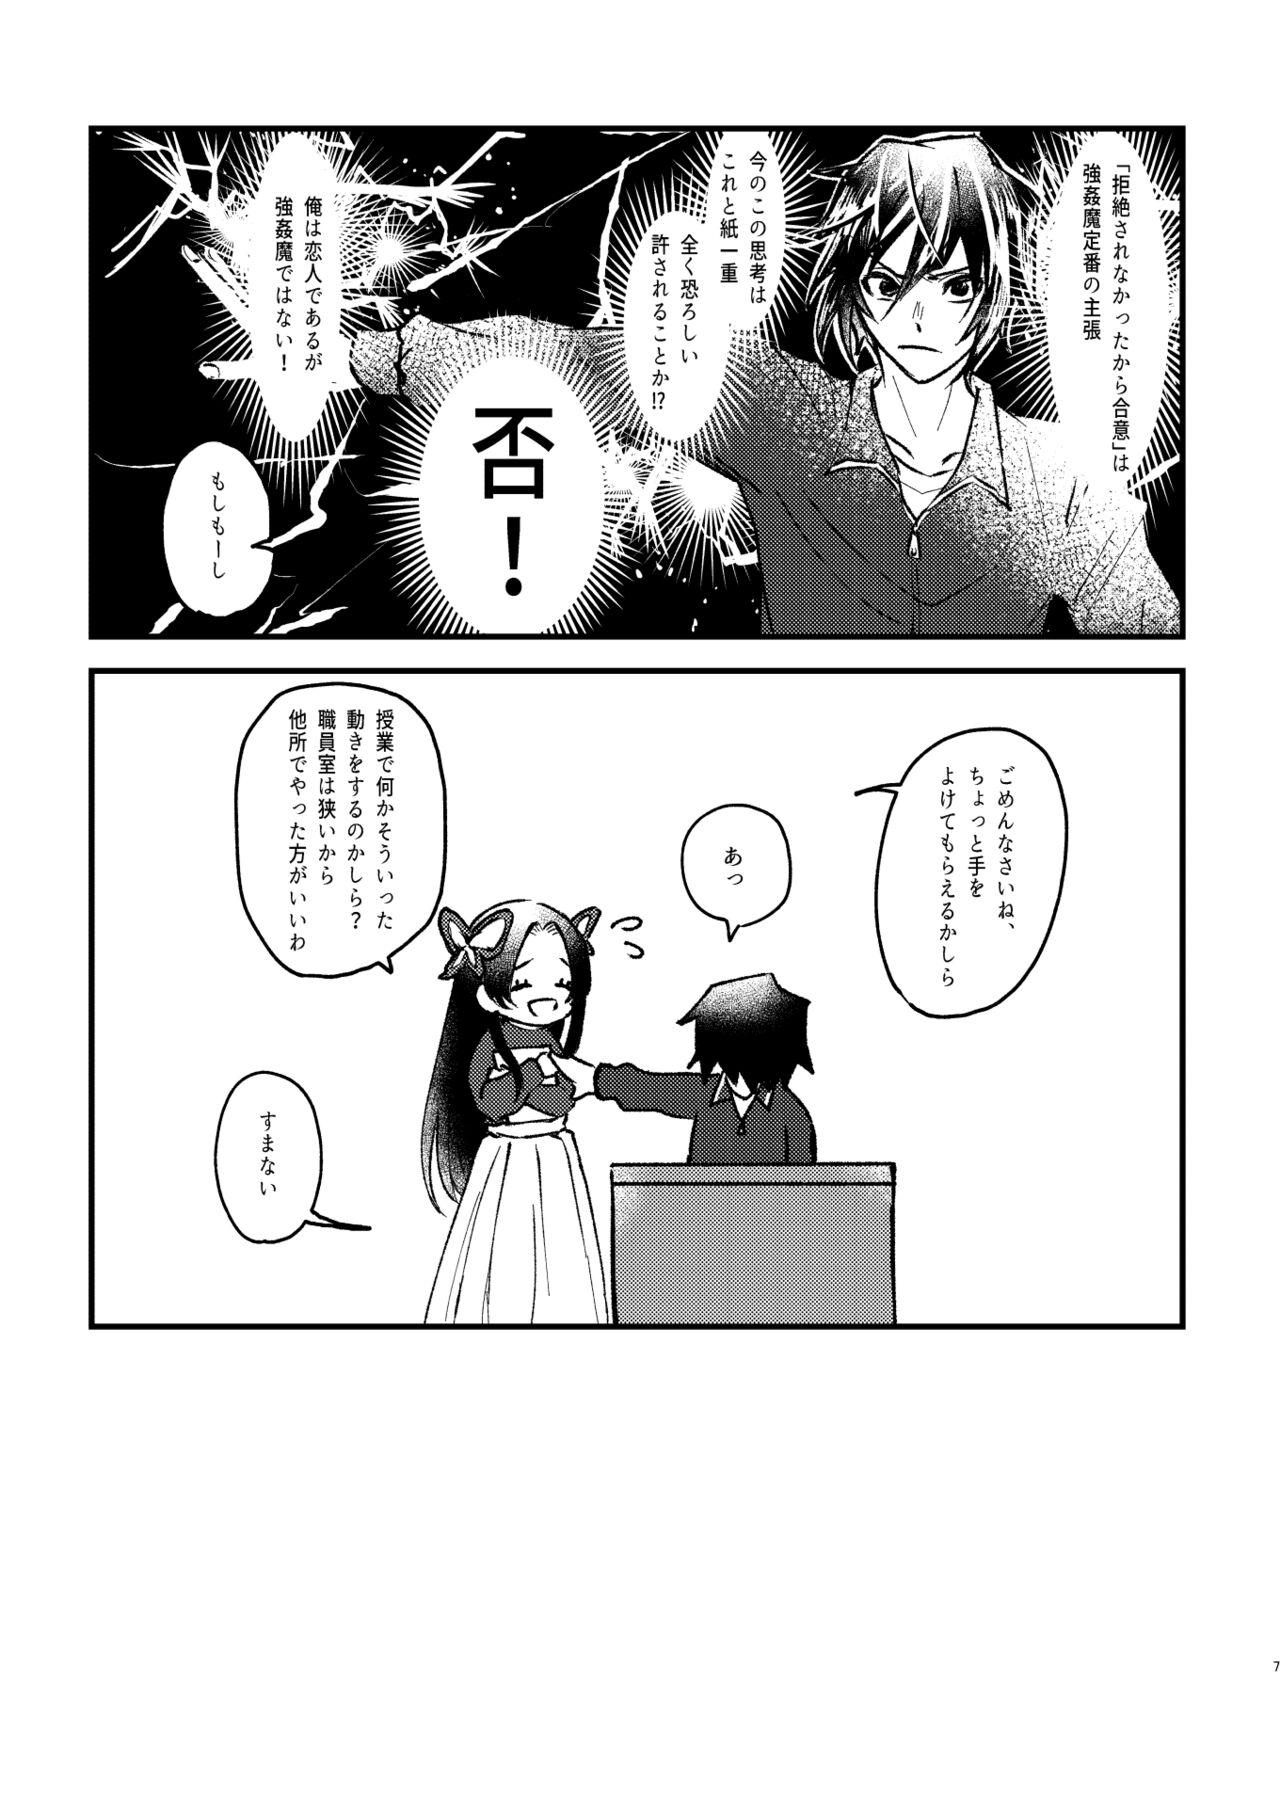 Class 嫌よ嫌よは好きのうち - Kimetsu no yaiba | demon slayer Anime - Page 6